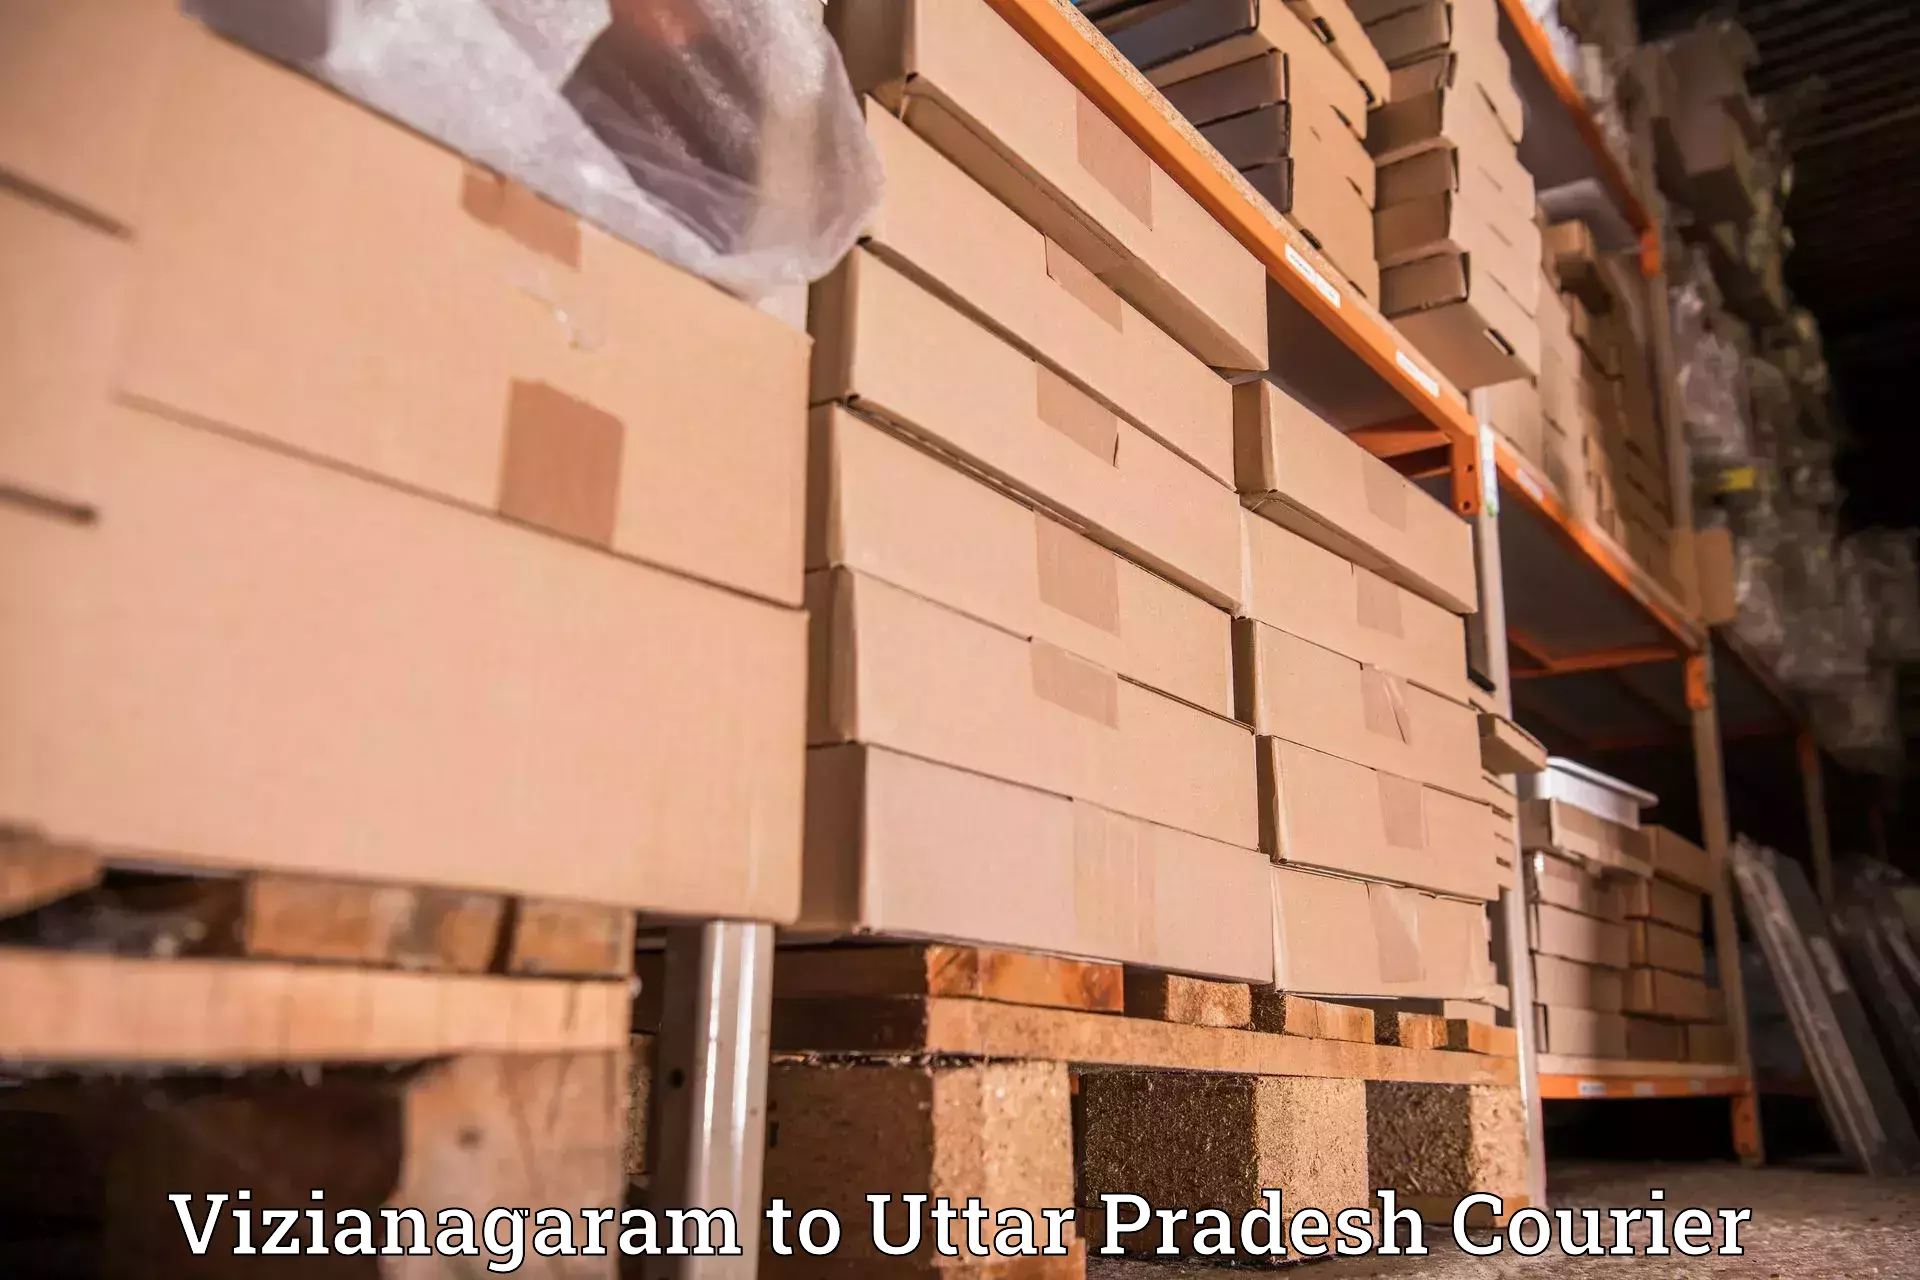 Streamlined delivery processes Vizianagaram to Kulpahar